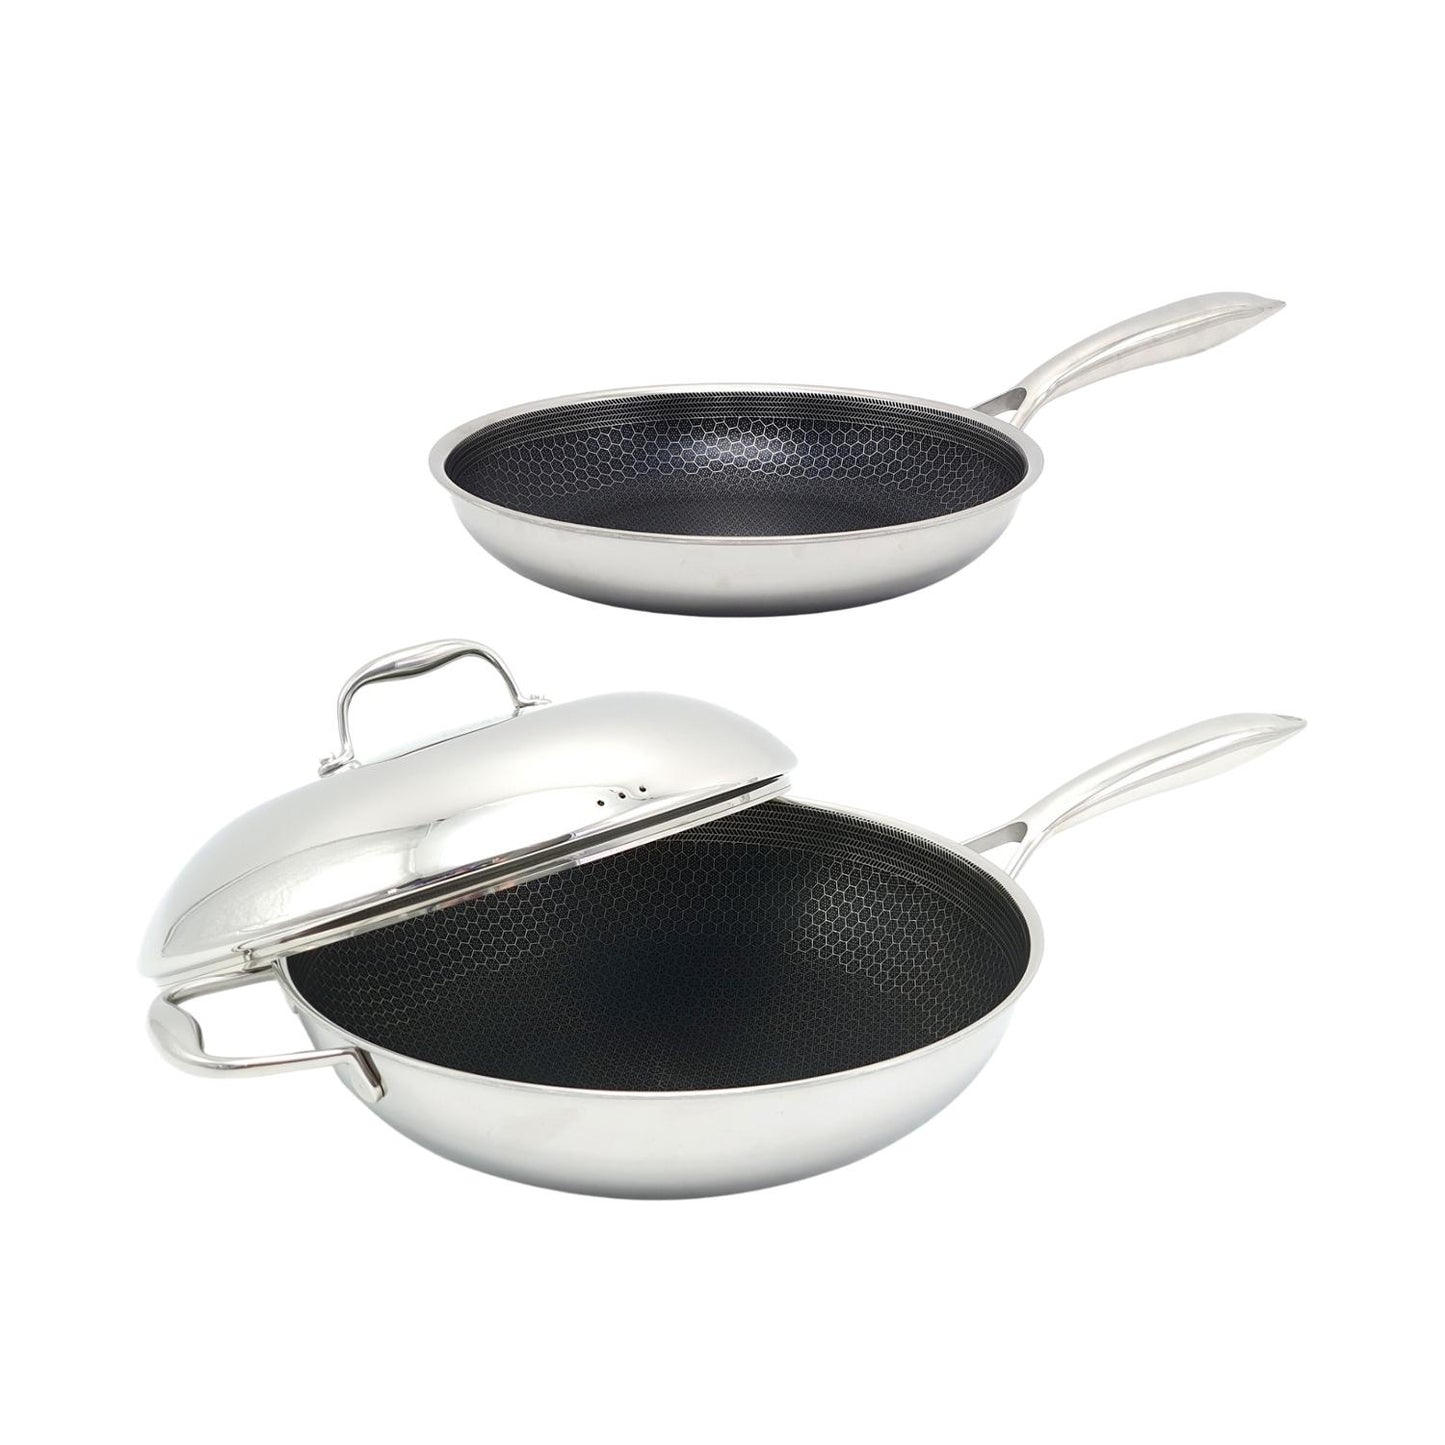 Cookcell Premium 3-Piece Cookware Set